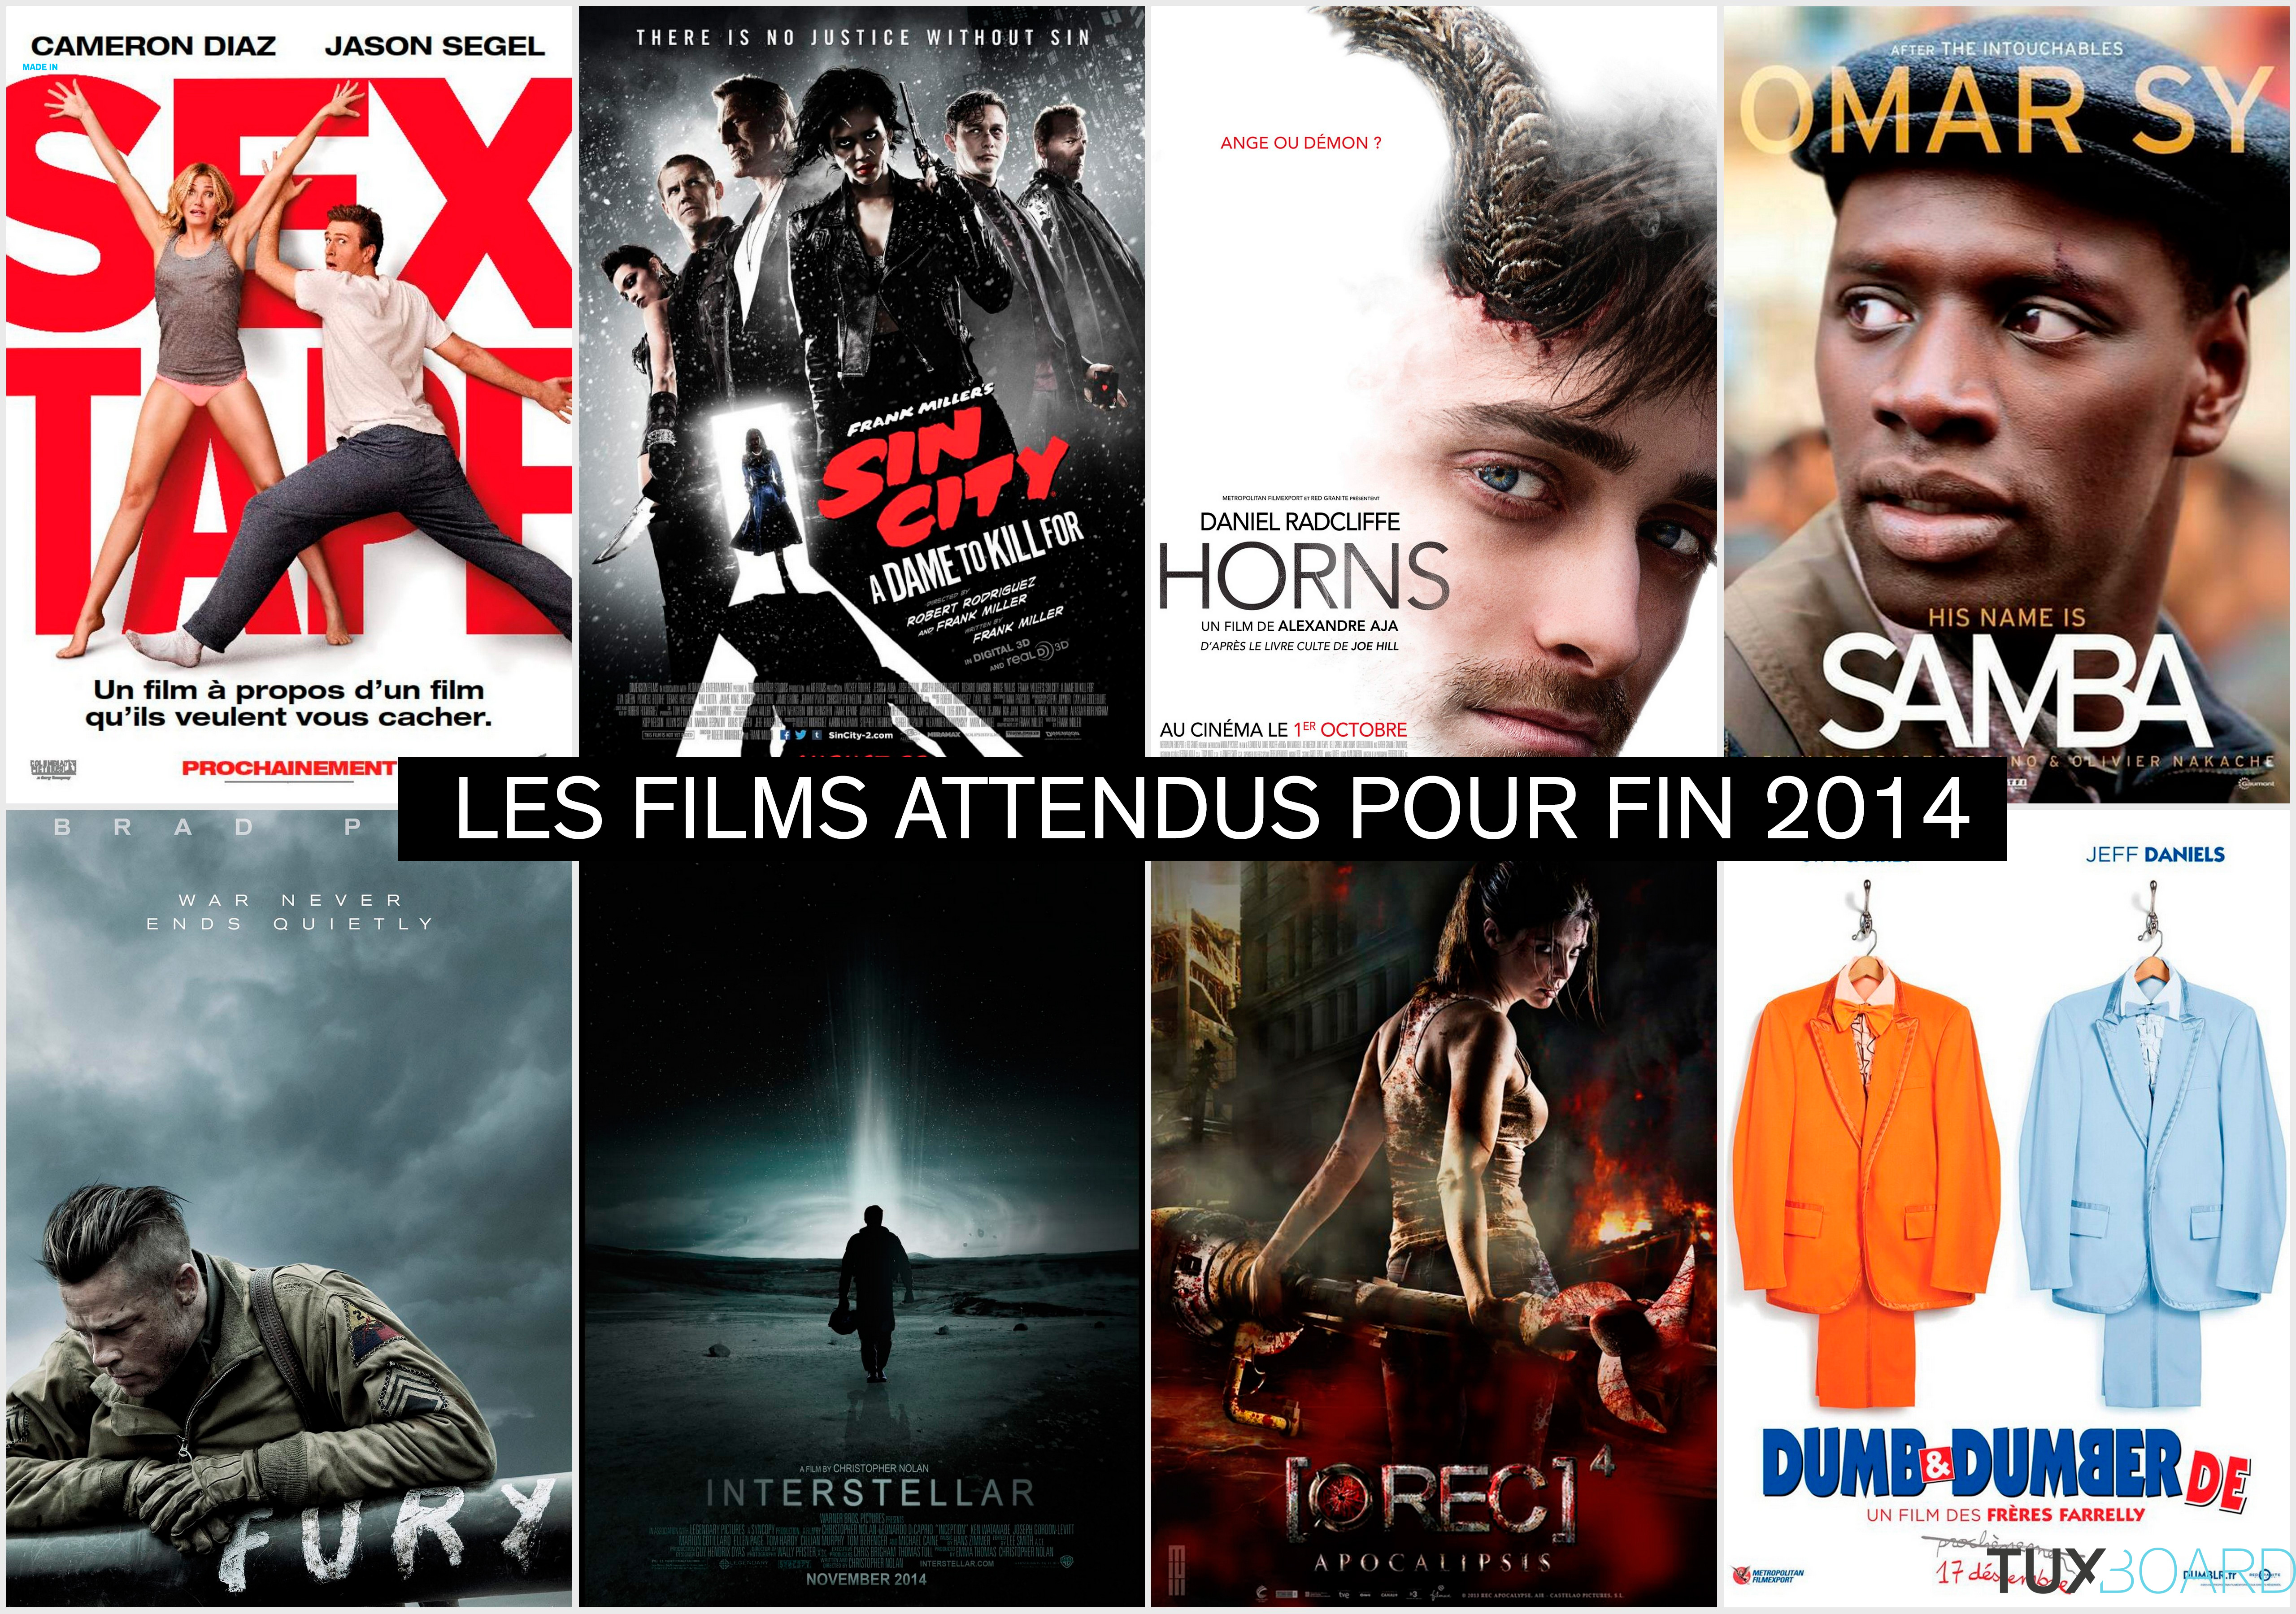 Films interessants a voir qui sortiront fin 2014